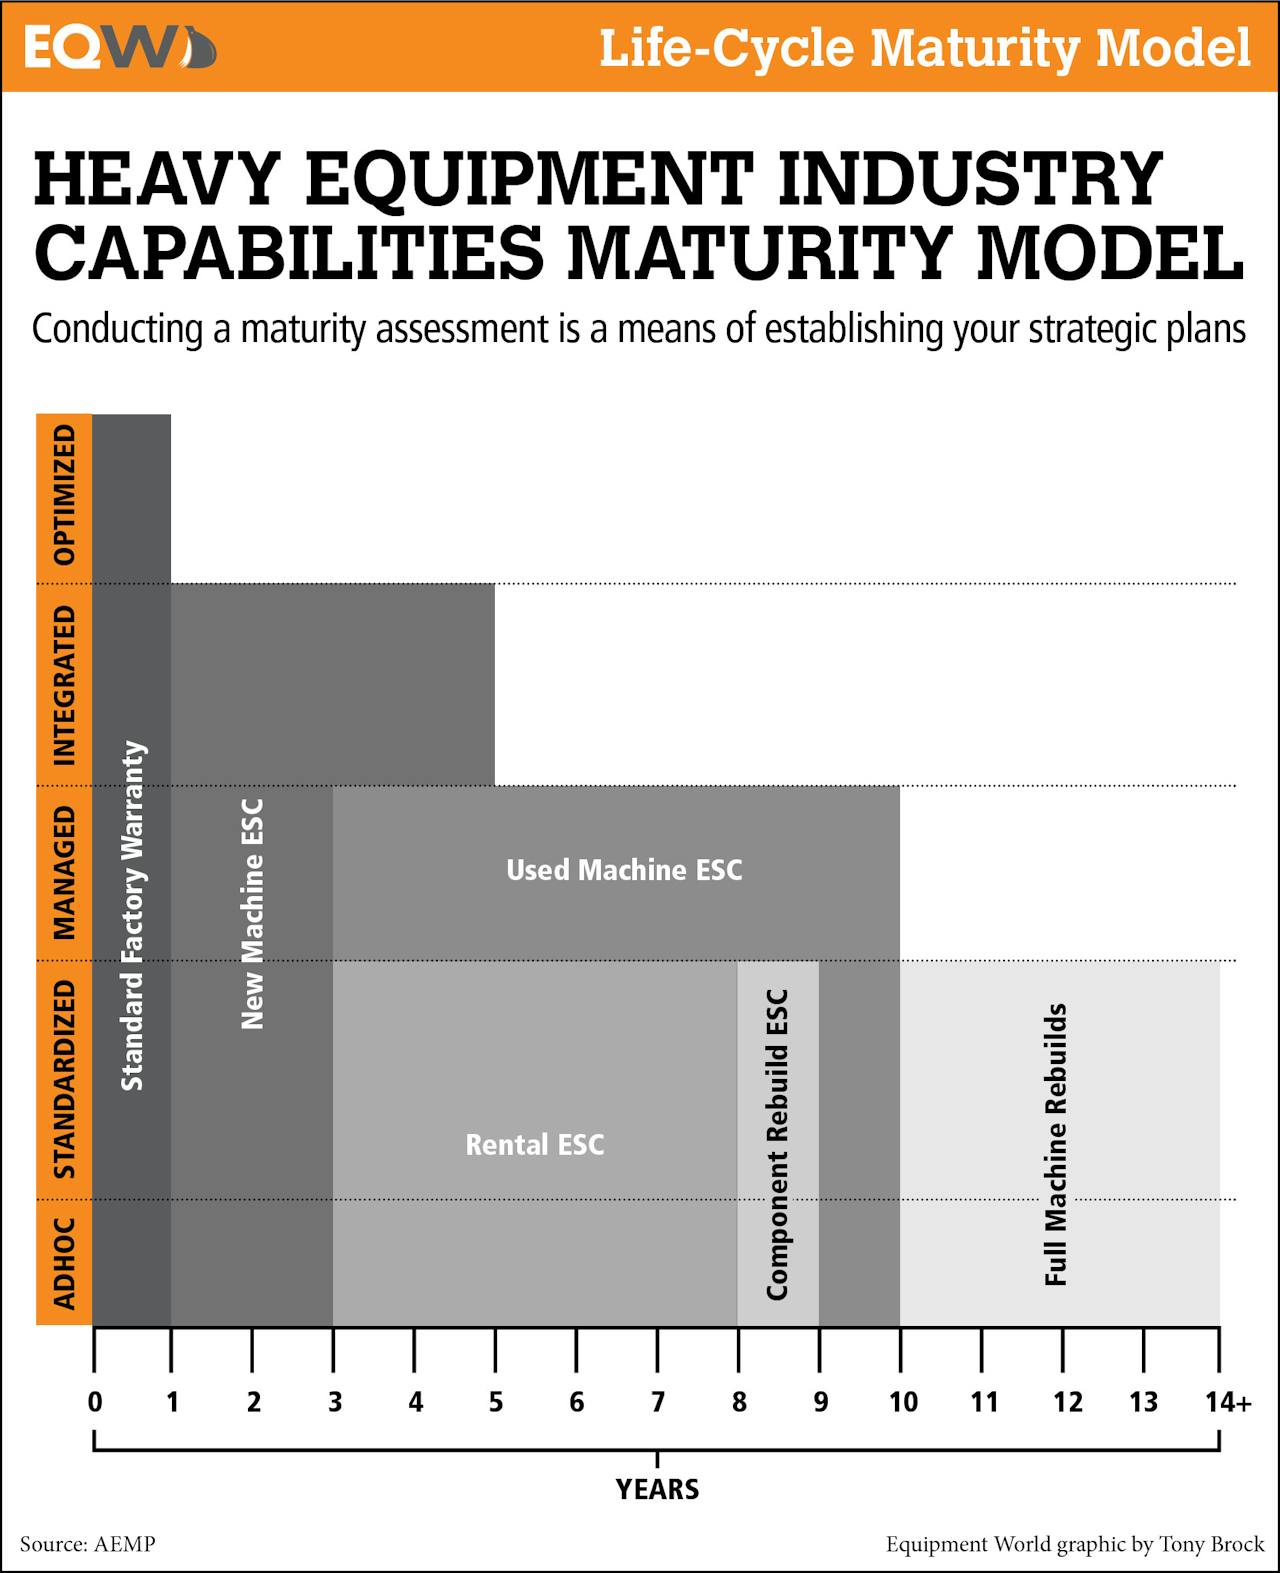 Heavy Equipment Life Cycle Maturity Model